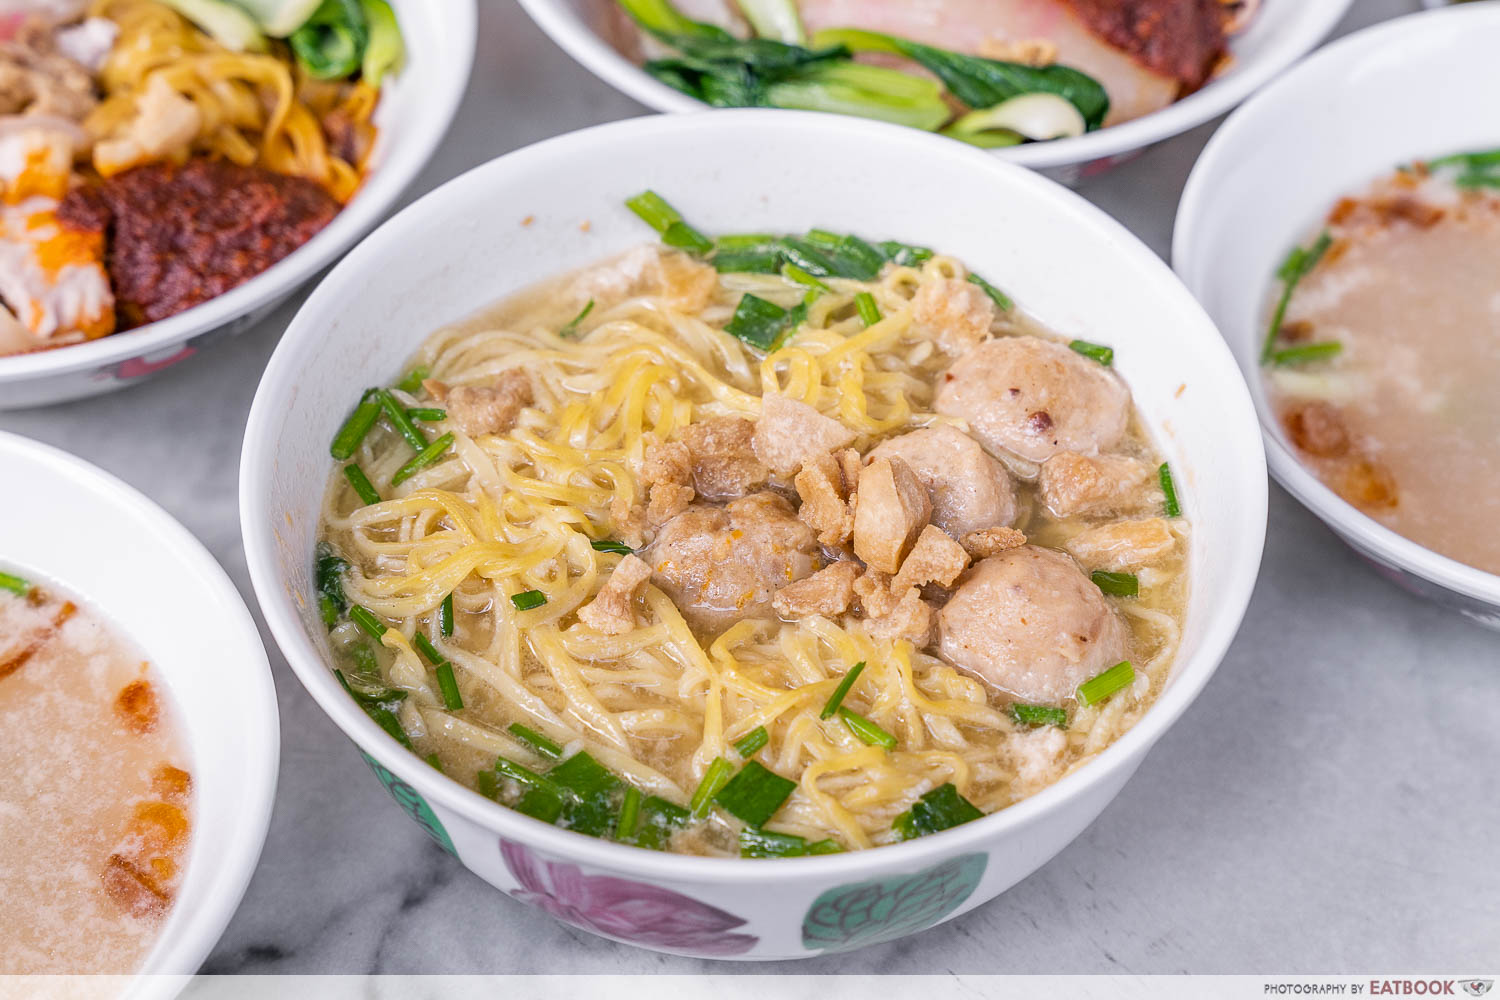 Xiang Xiang Bak Chor Mee - traditional minced pork noodles